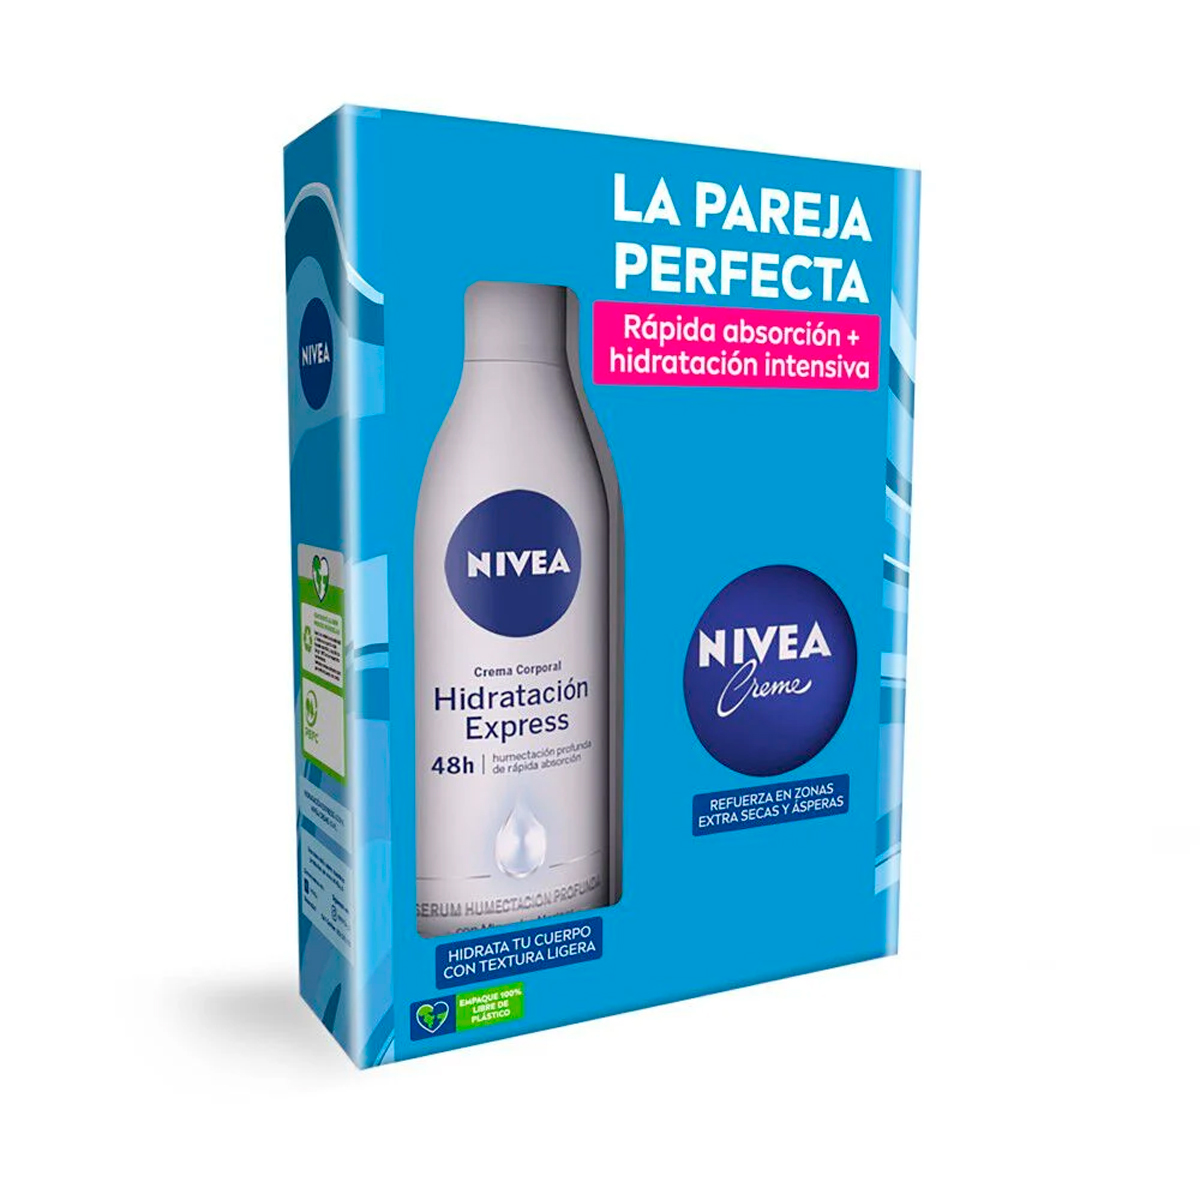 Nivea Crema Corporal Hidratación Express 400ml Creme Market